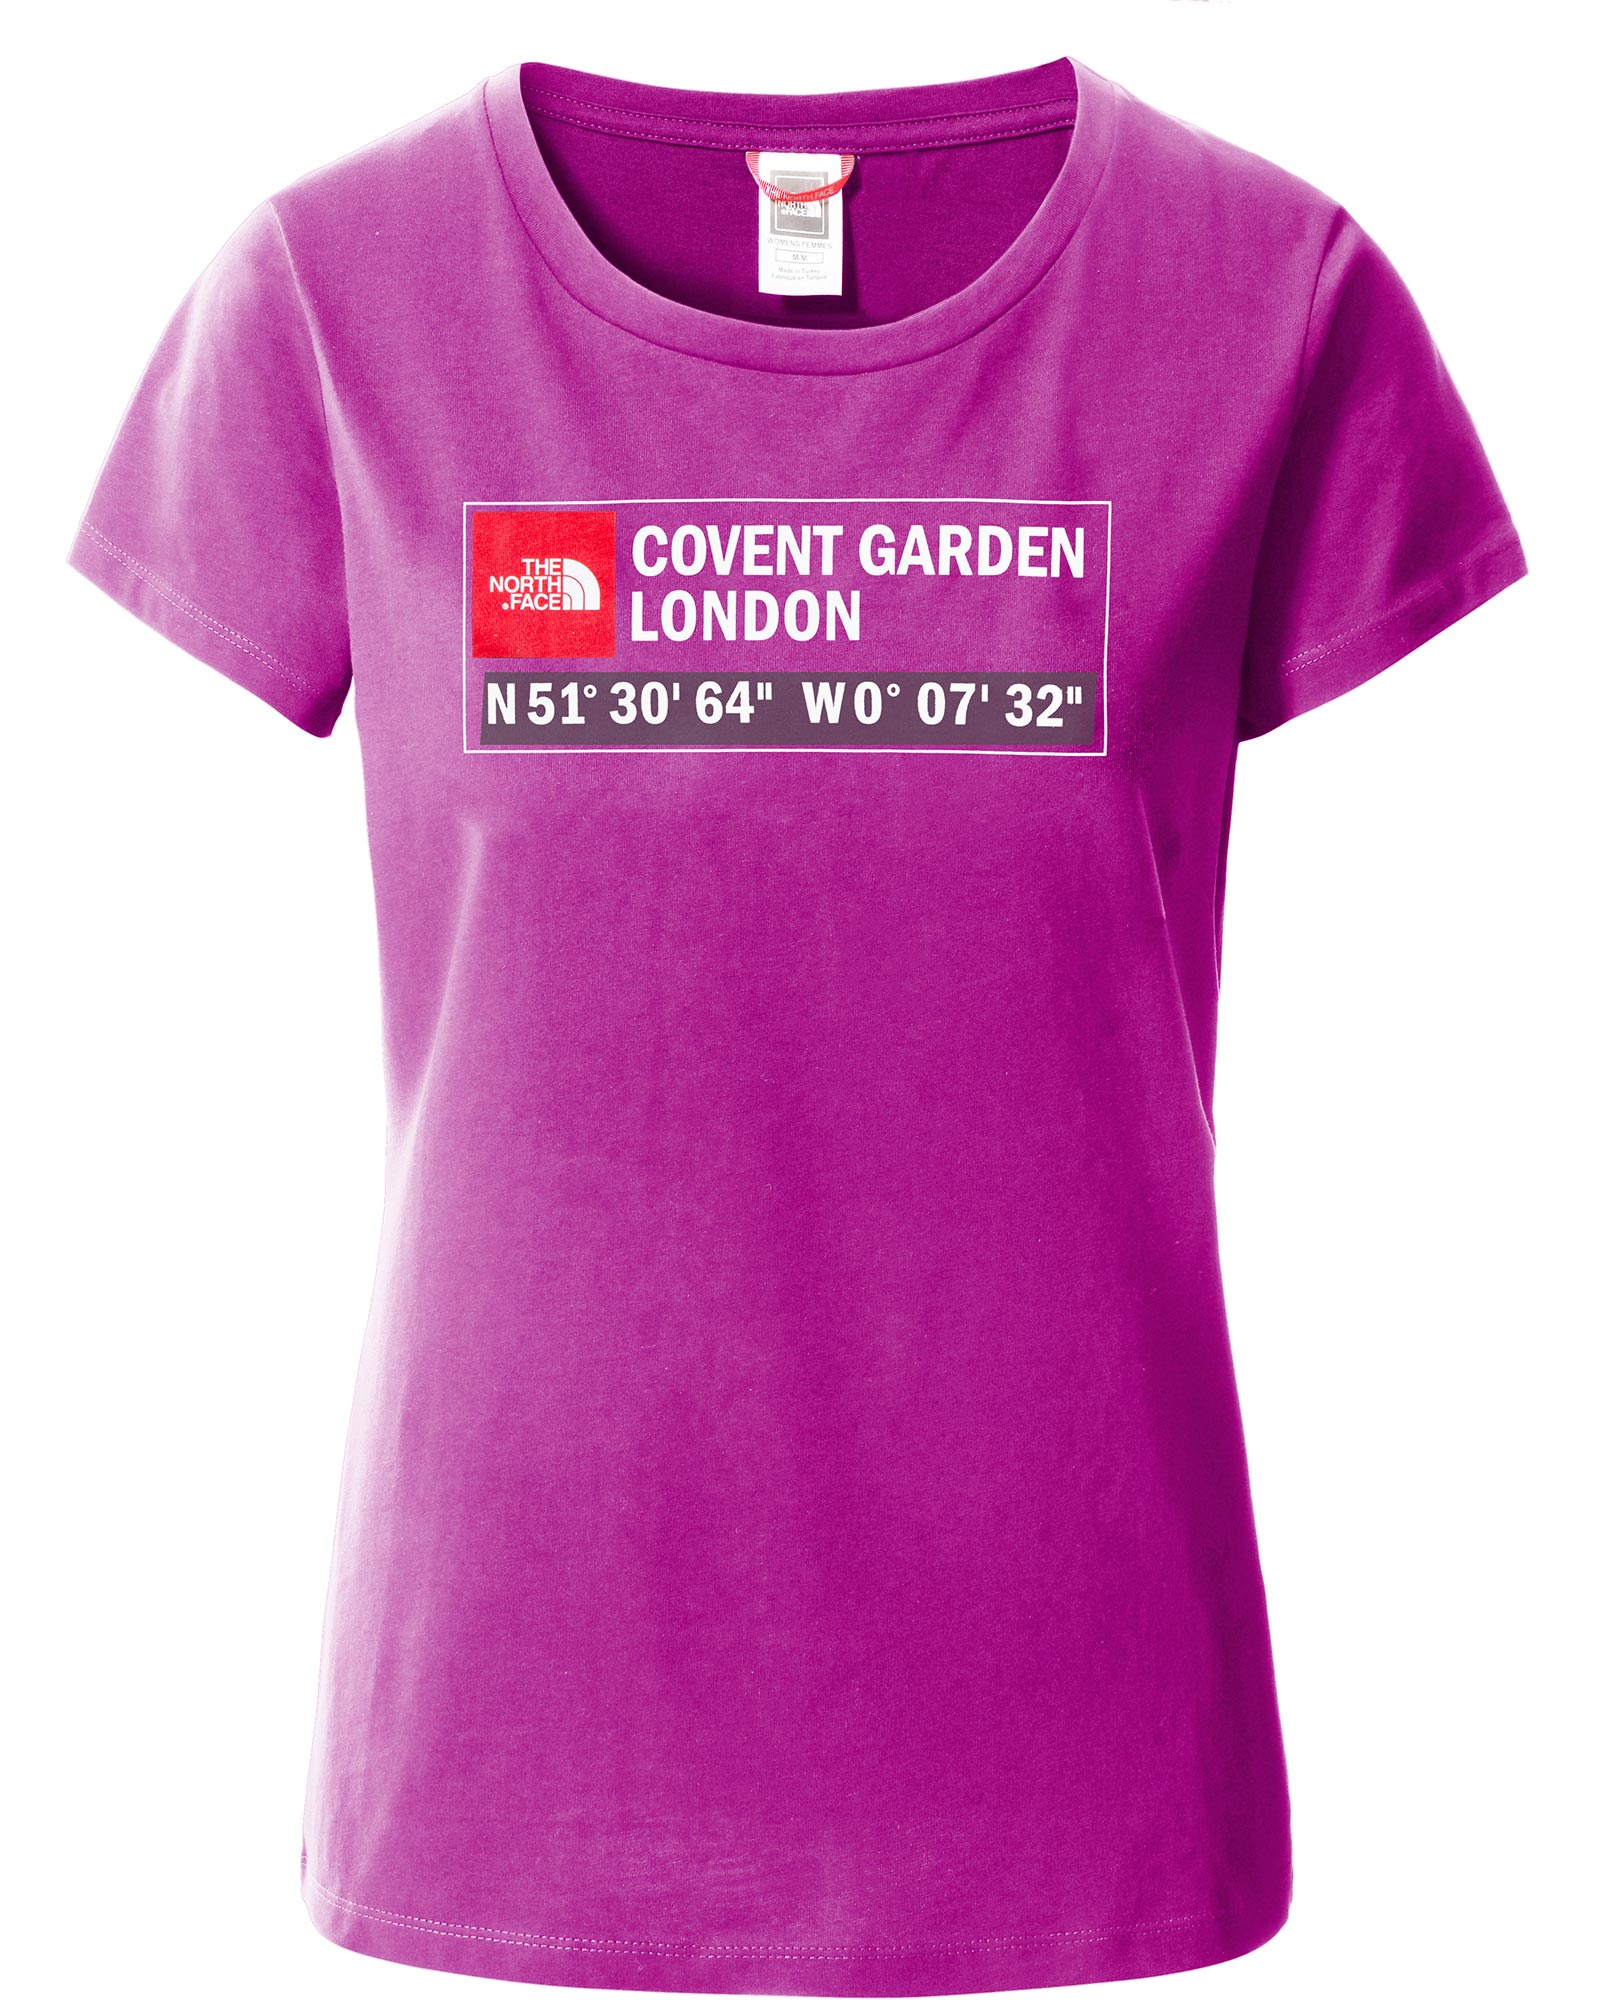 The North Face Covent Garden GPS Logo Women’s T Shirt - Magic Magenta L